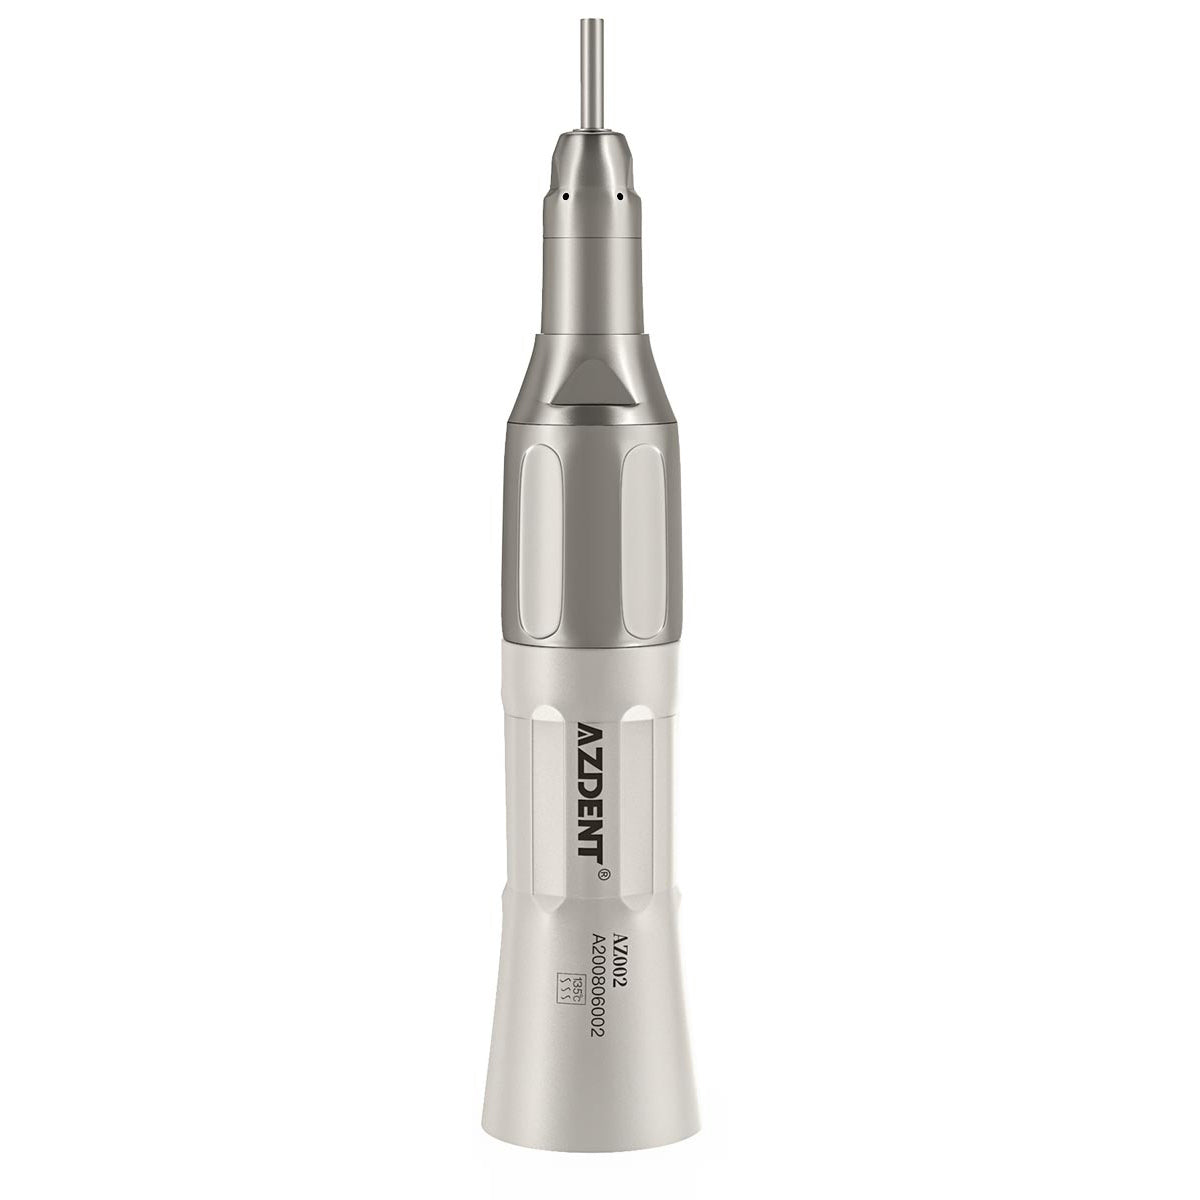 AZDENT 1:1 Low Speed Straight Nose Cone Handpiece With External Water Spray - azdentall.com